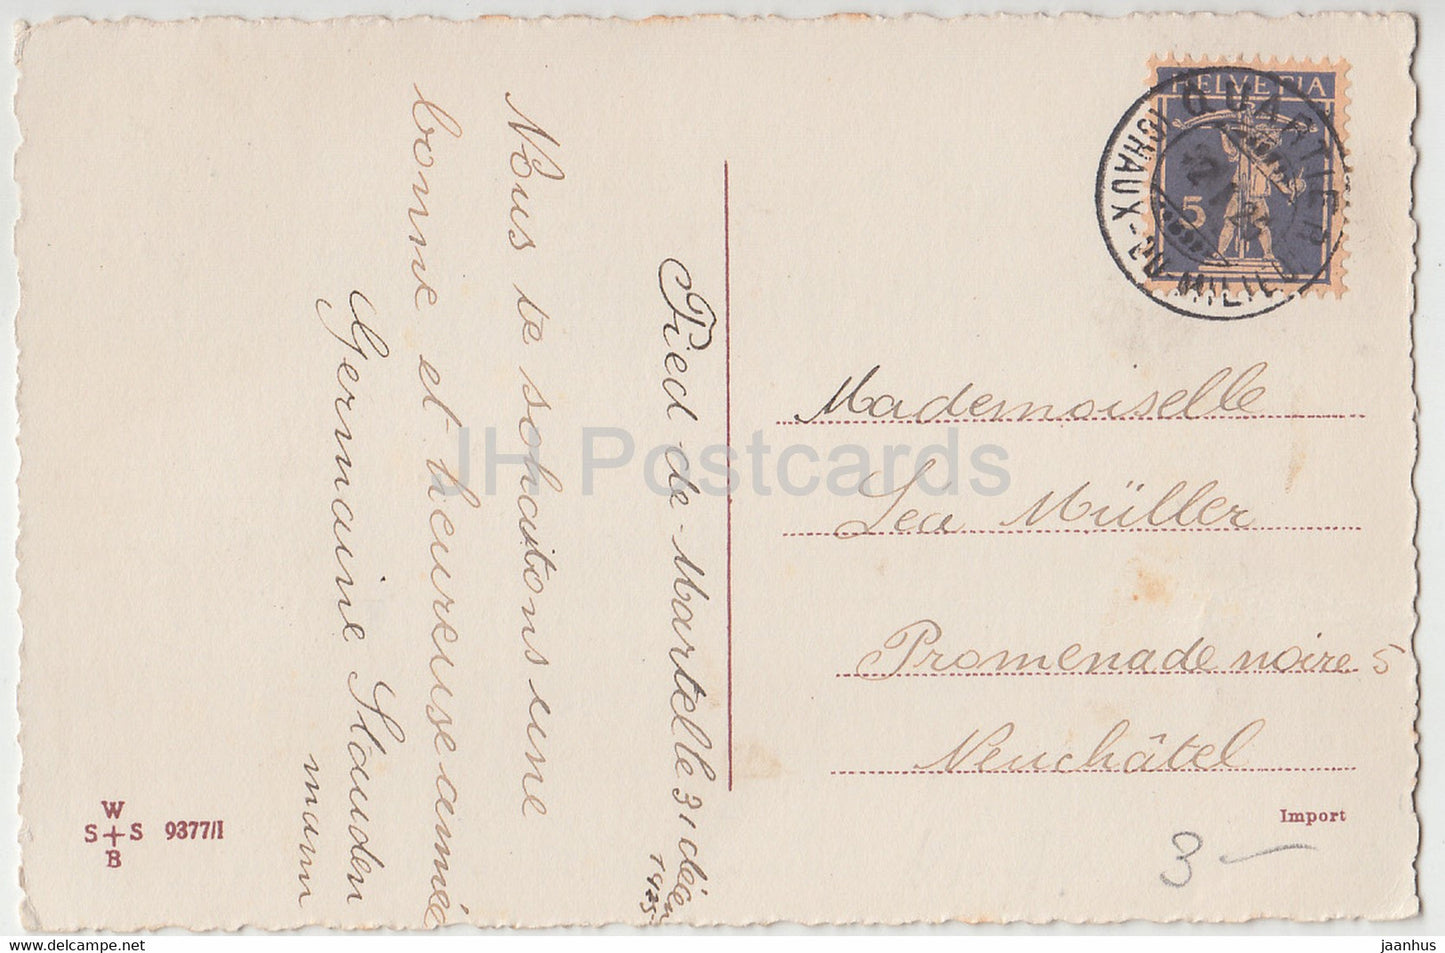 New Year Greeting Card - Bonne Annee - birds - blue tit - WSSB 9377/I - old postcard - 1926 - France - used